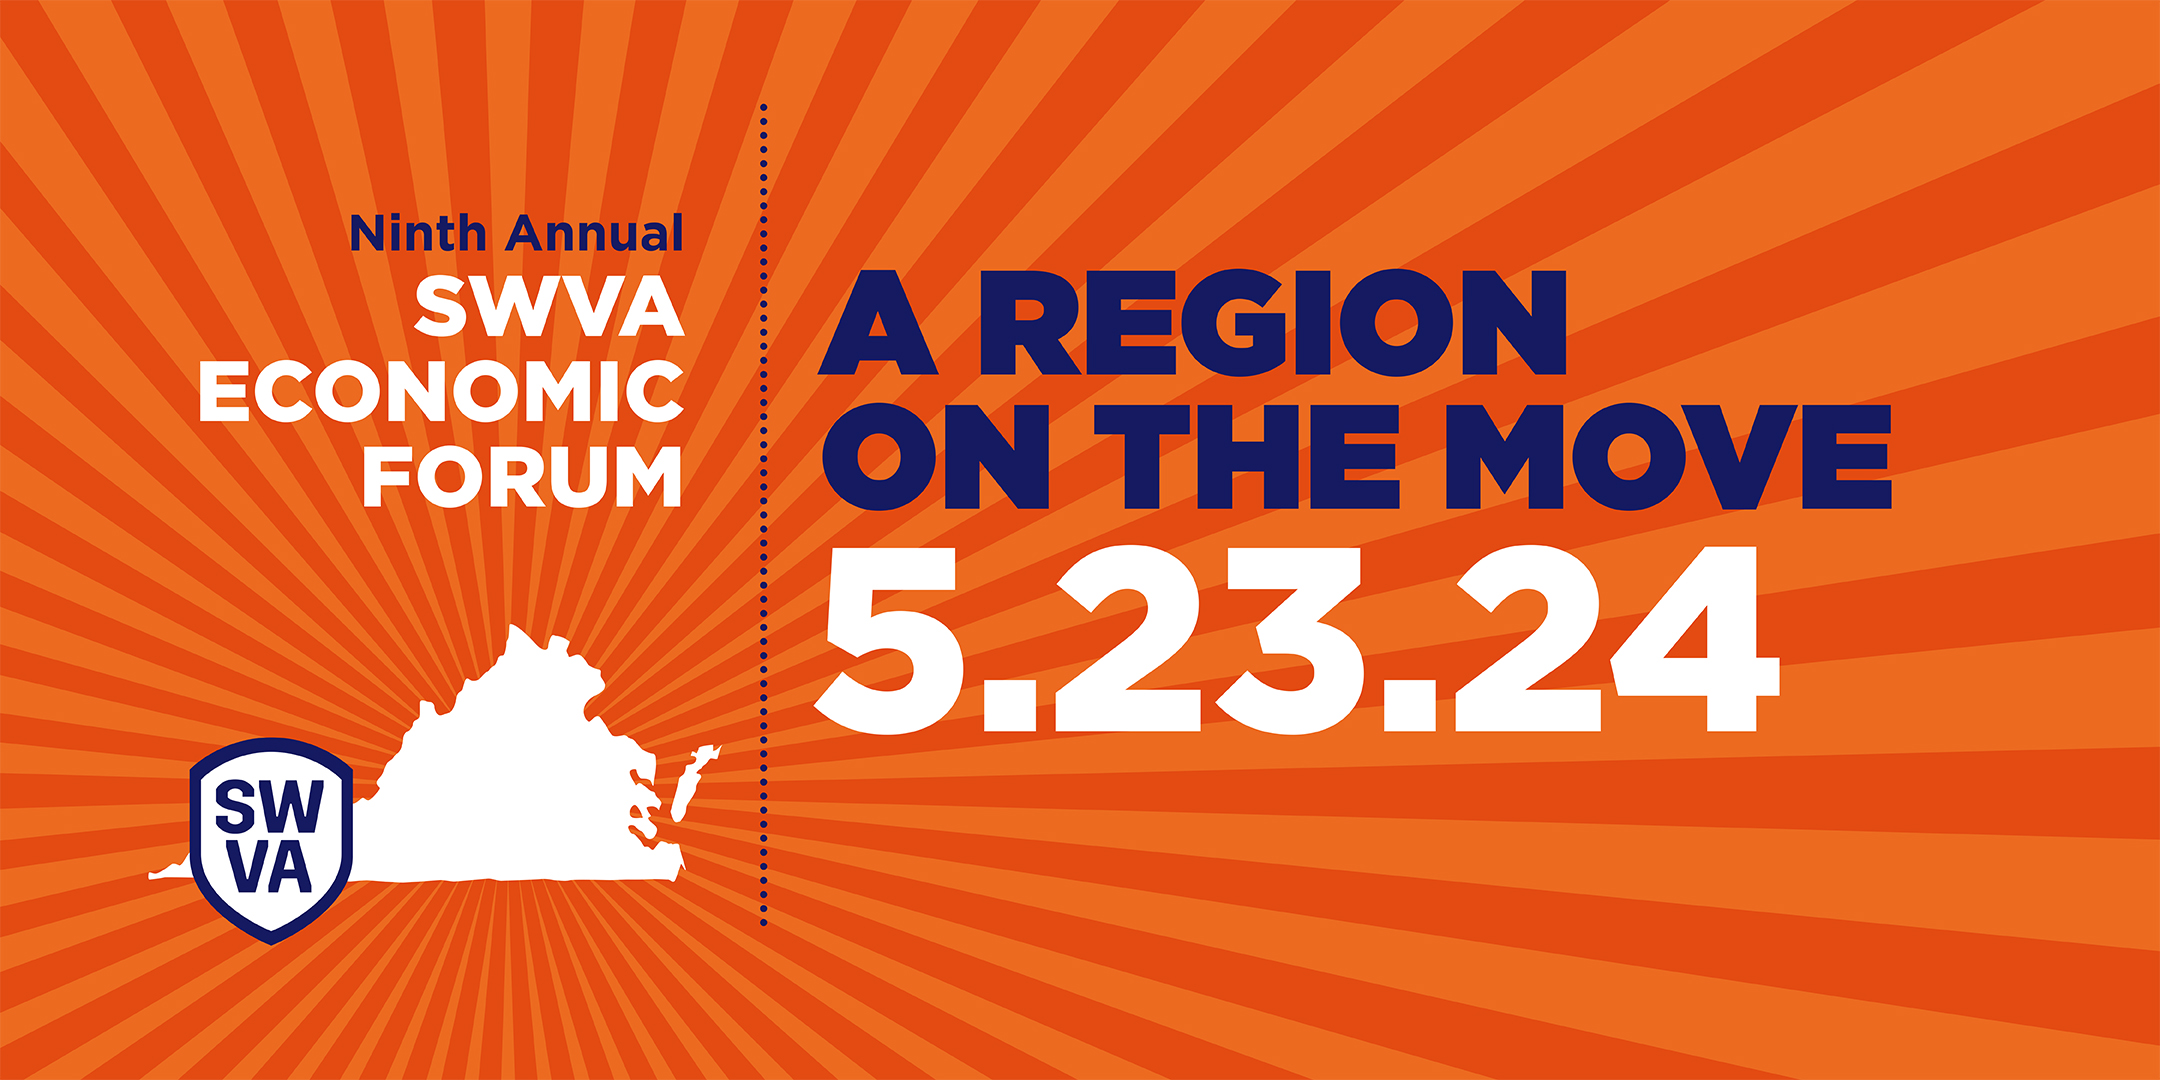 Ninth Annual SWVA Economic Forum A region on the move